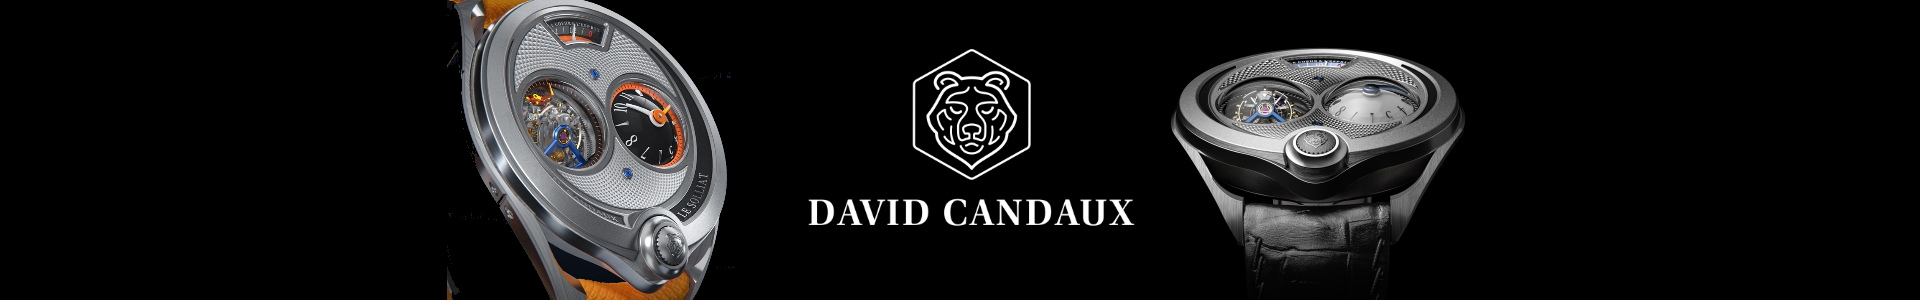 David Candaux